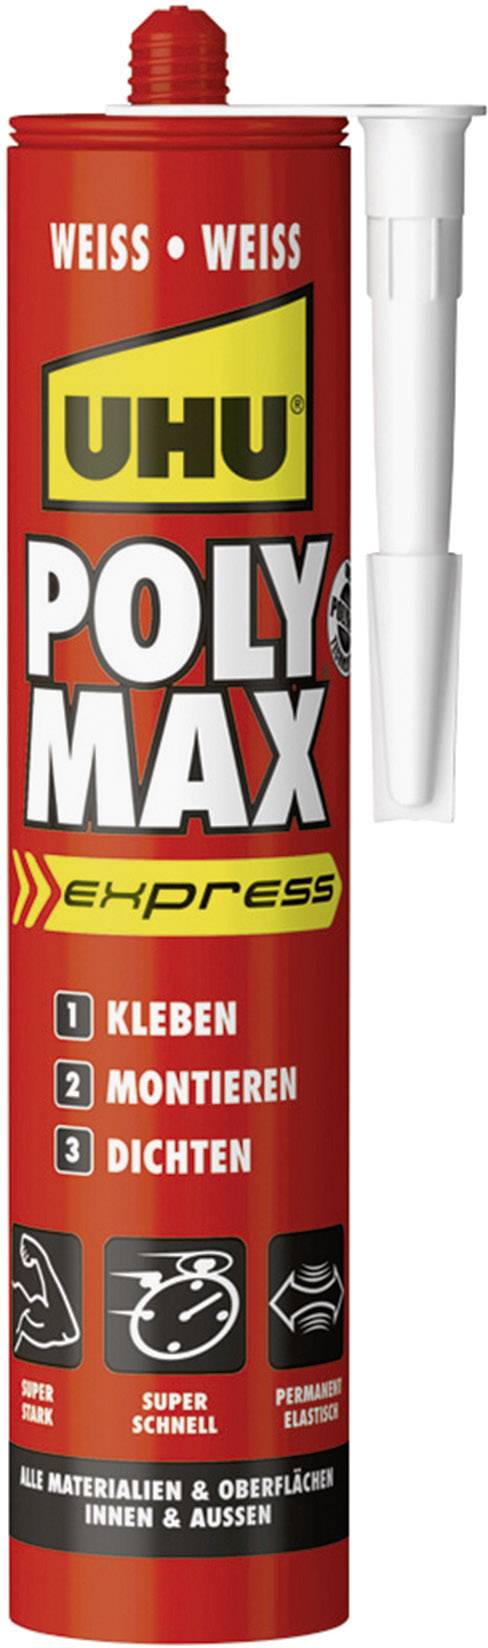 fragment Aannames, aannames. Raad eens wastafel UHU POLY MAX EXPRESS WEISS Adhesive sealant 47820 425 g | Conrad.com